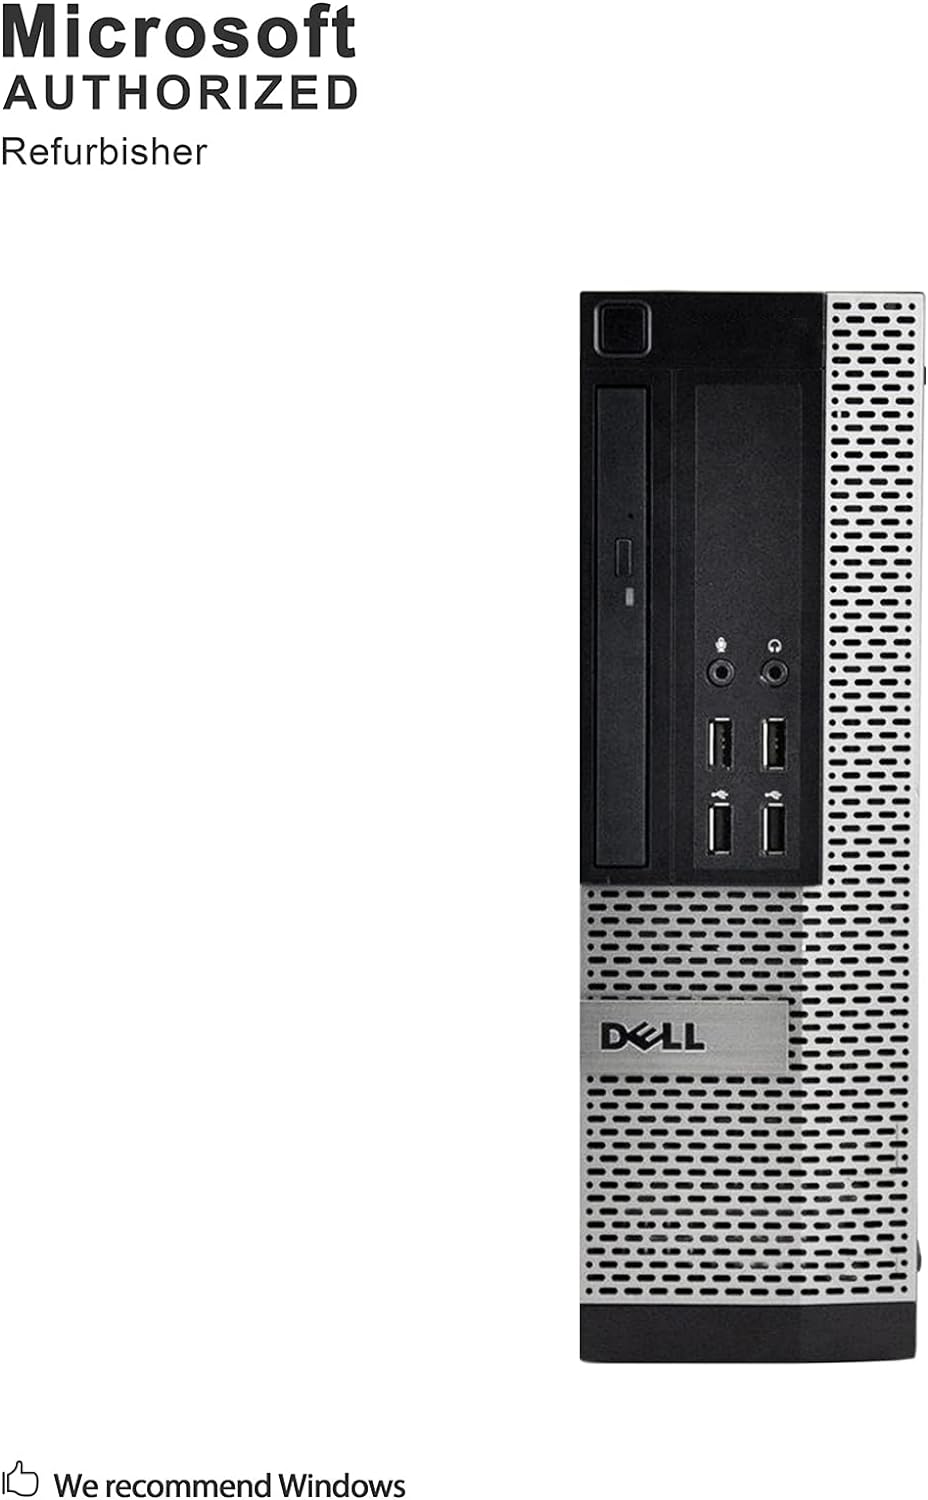 Dell Optiplex 9020 SFF High Performance Desktop Computer, Intel Core i7-4790 up to 4.0GHz, 16GB RAM, 960GB SSD, Windows 10 Pro, USB WiFi Adapter, (Renewed)